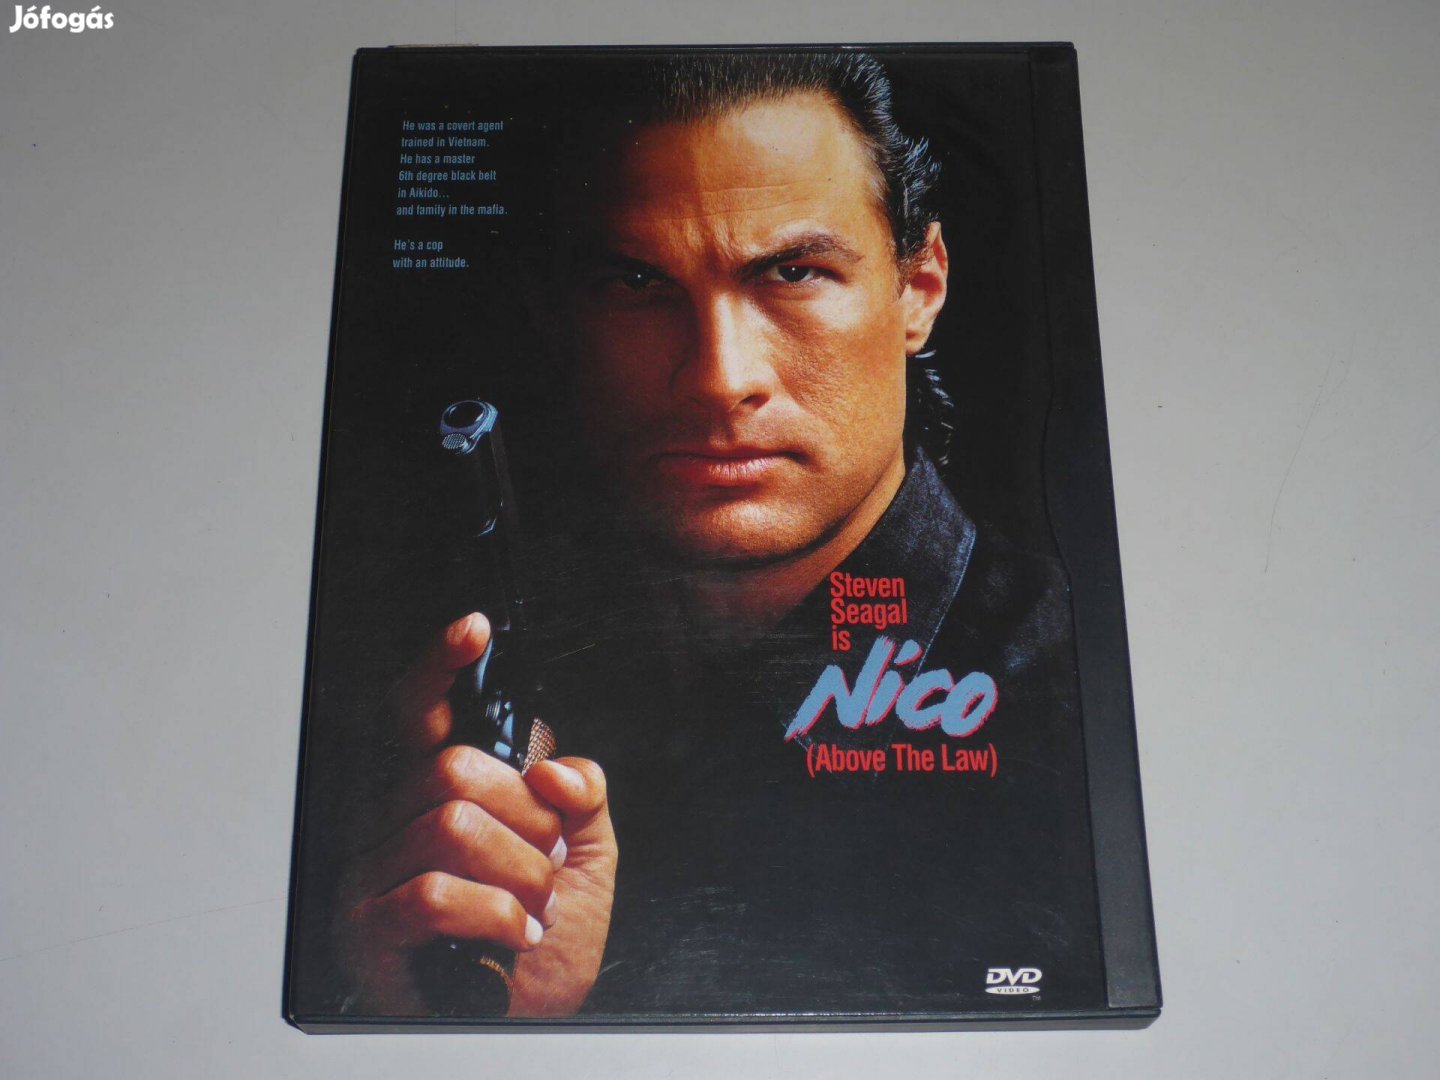 Nico DVD flm "